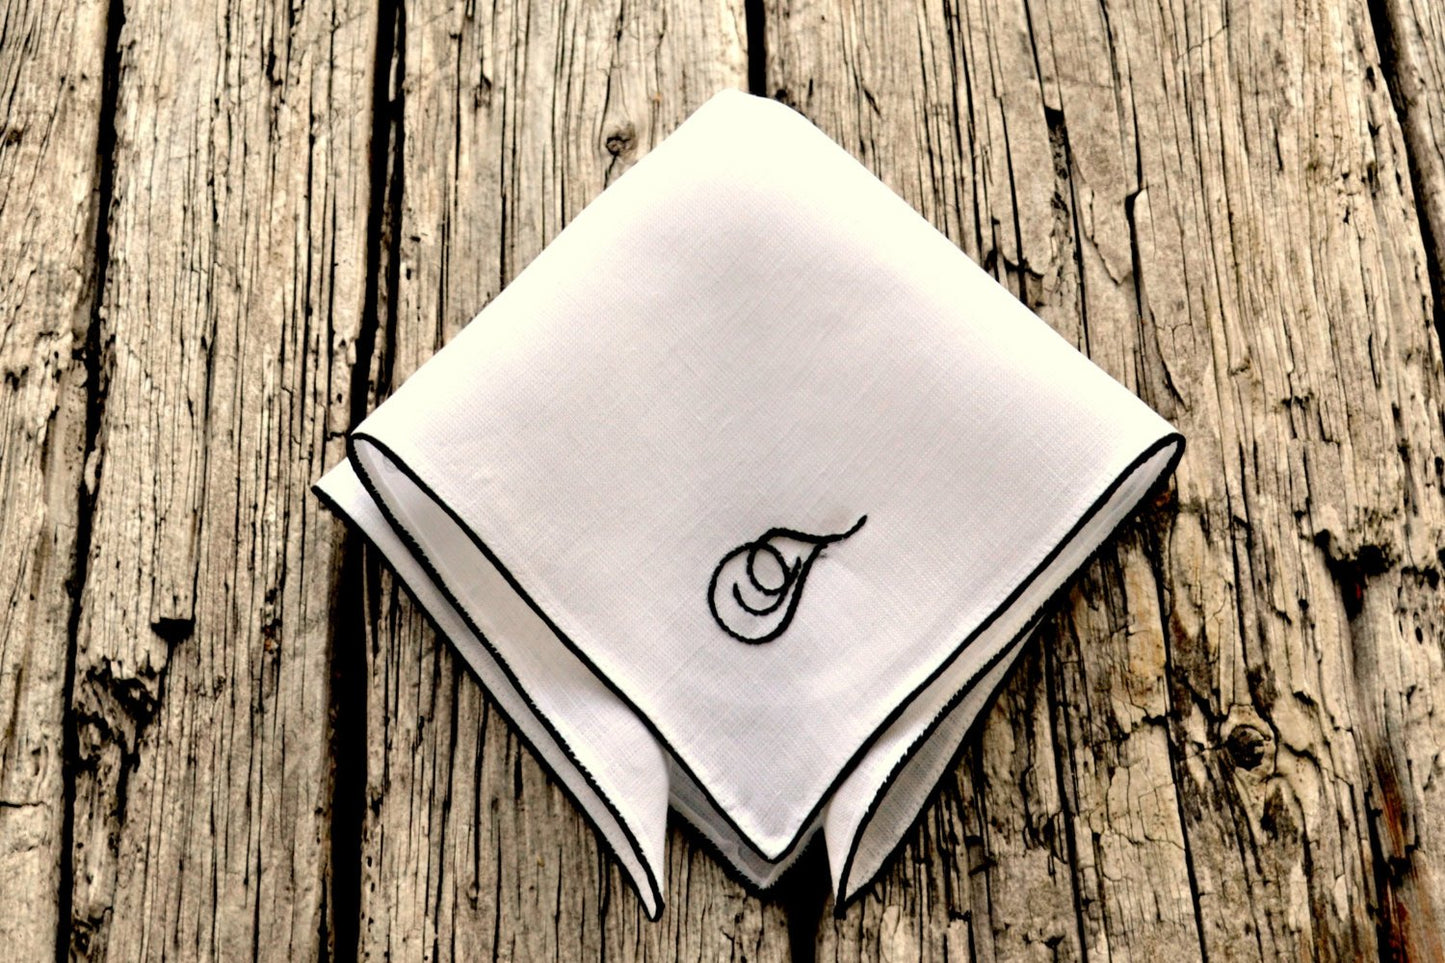 Irish linen pocket square with black border and monogram